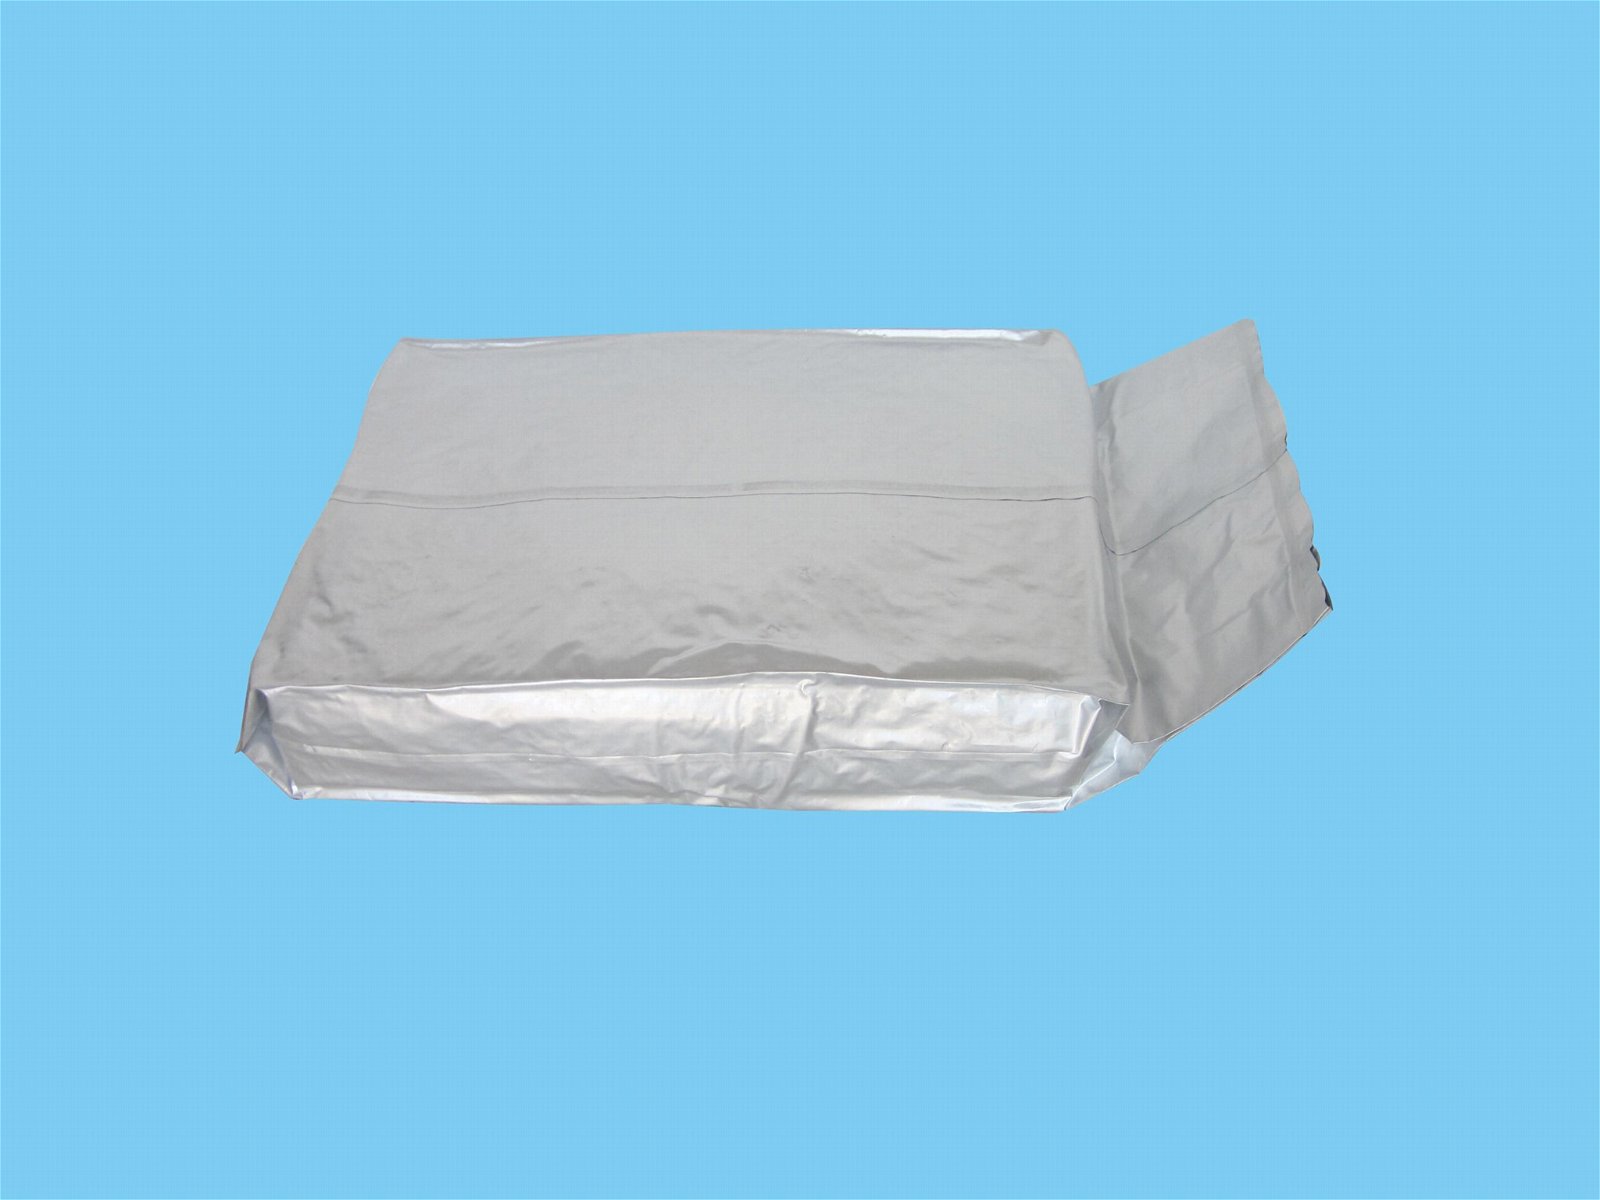 25kg moisture barrier foil bags Manufacturer 3